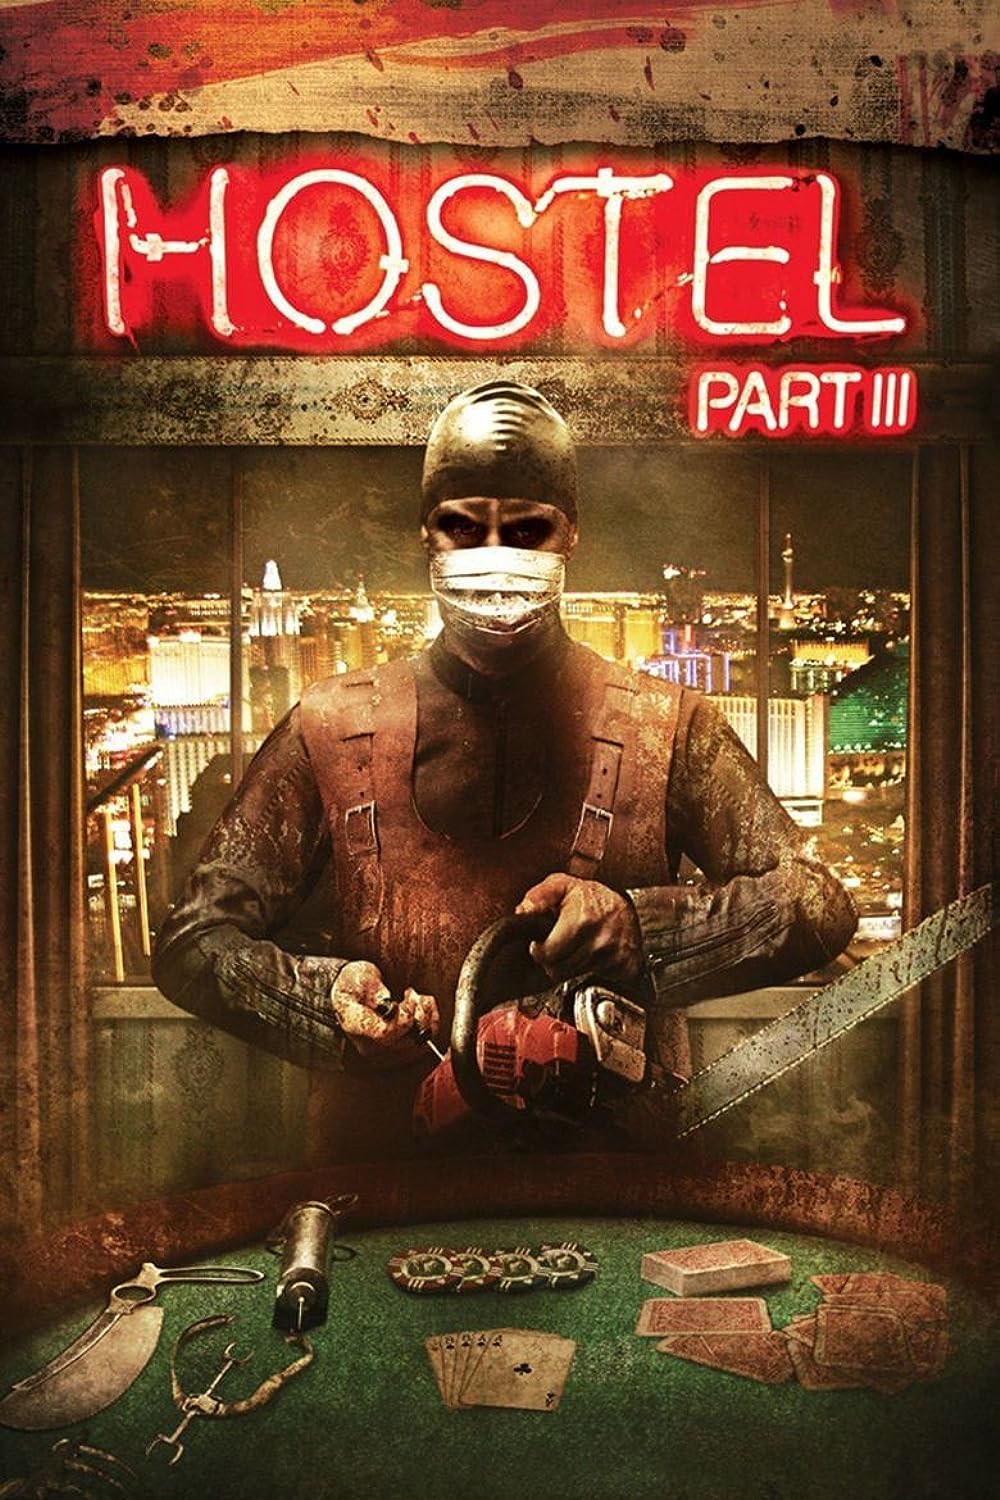 FULL MOVIE: Hostel: Part III (2011)